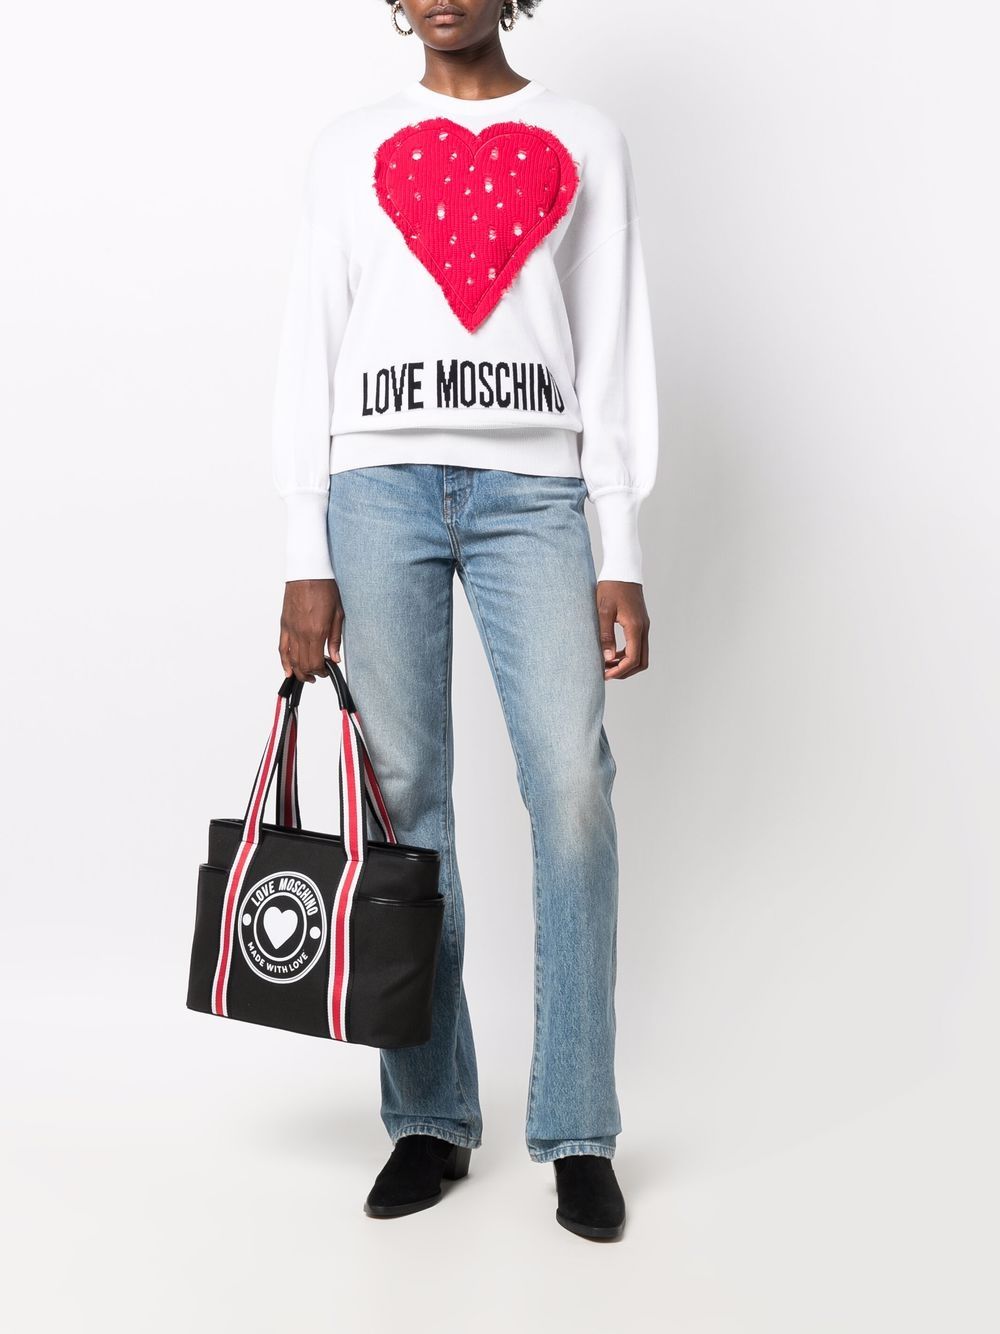 фото Love moschino свитер с нашивкой